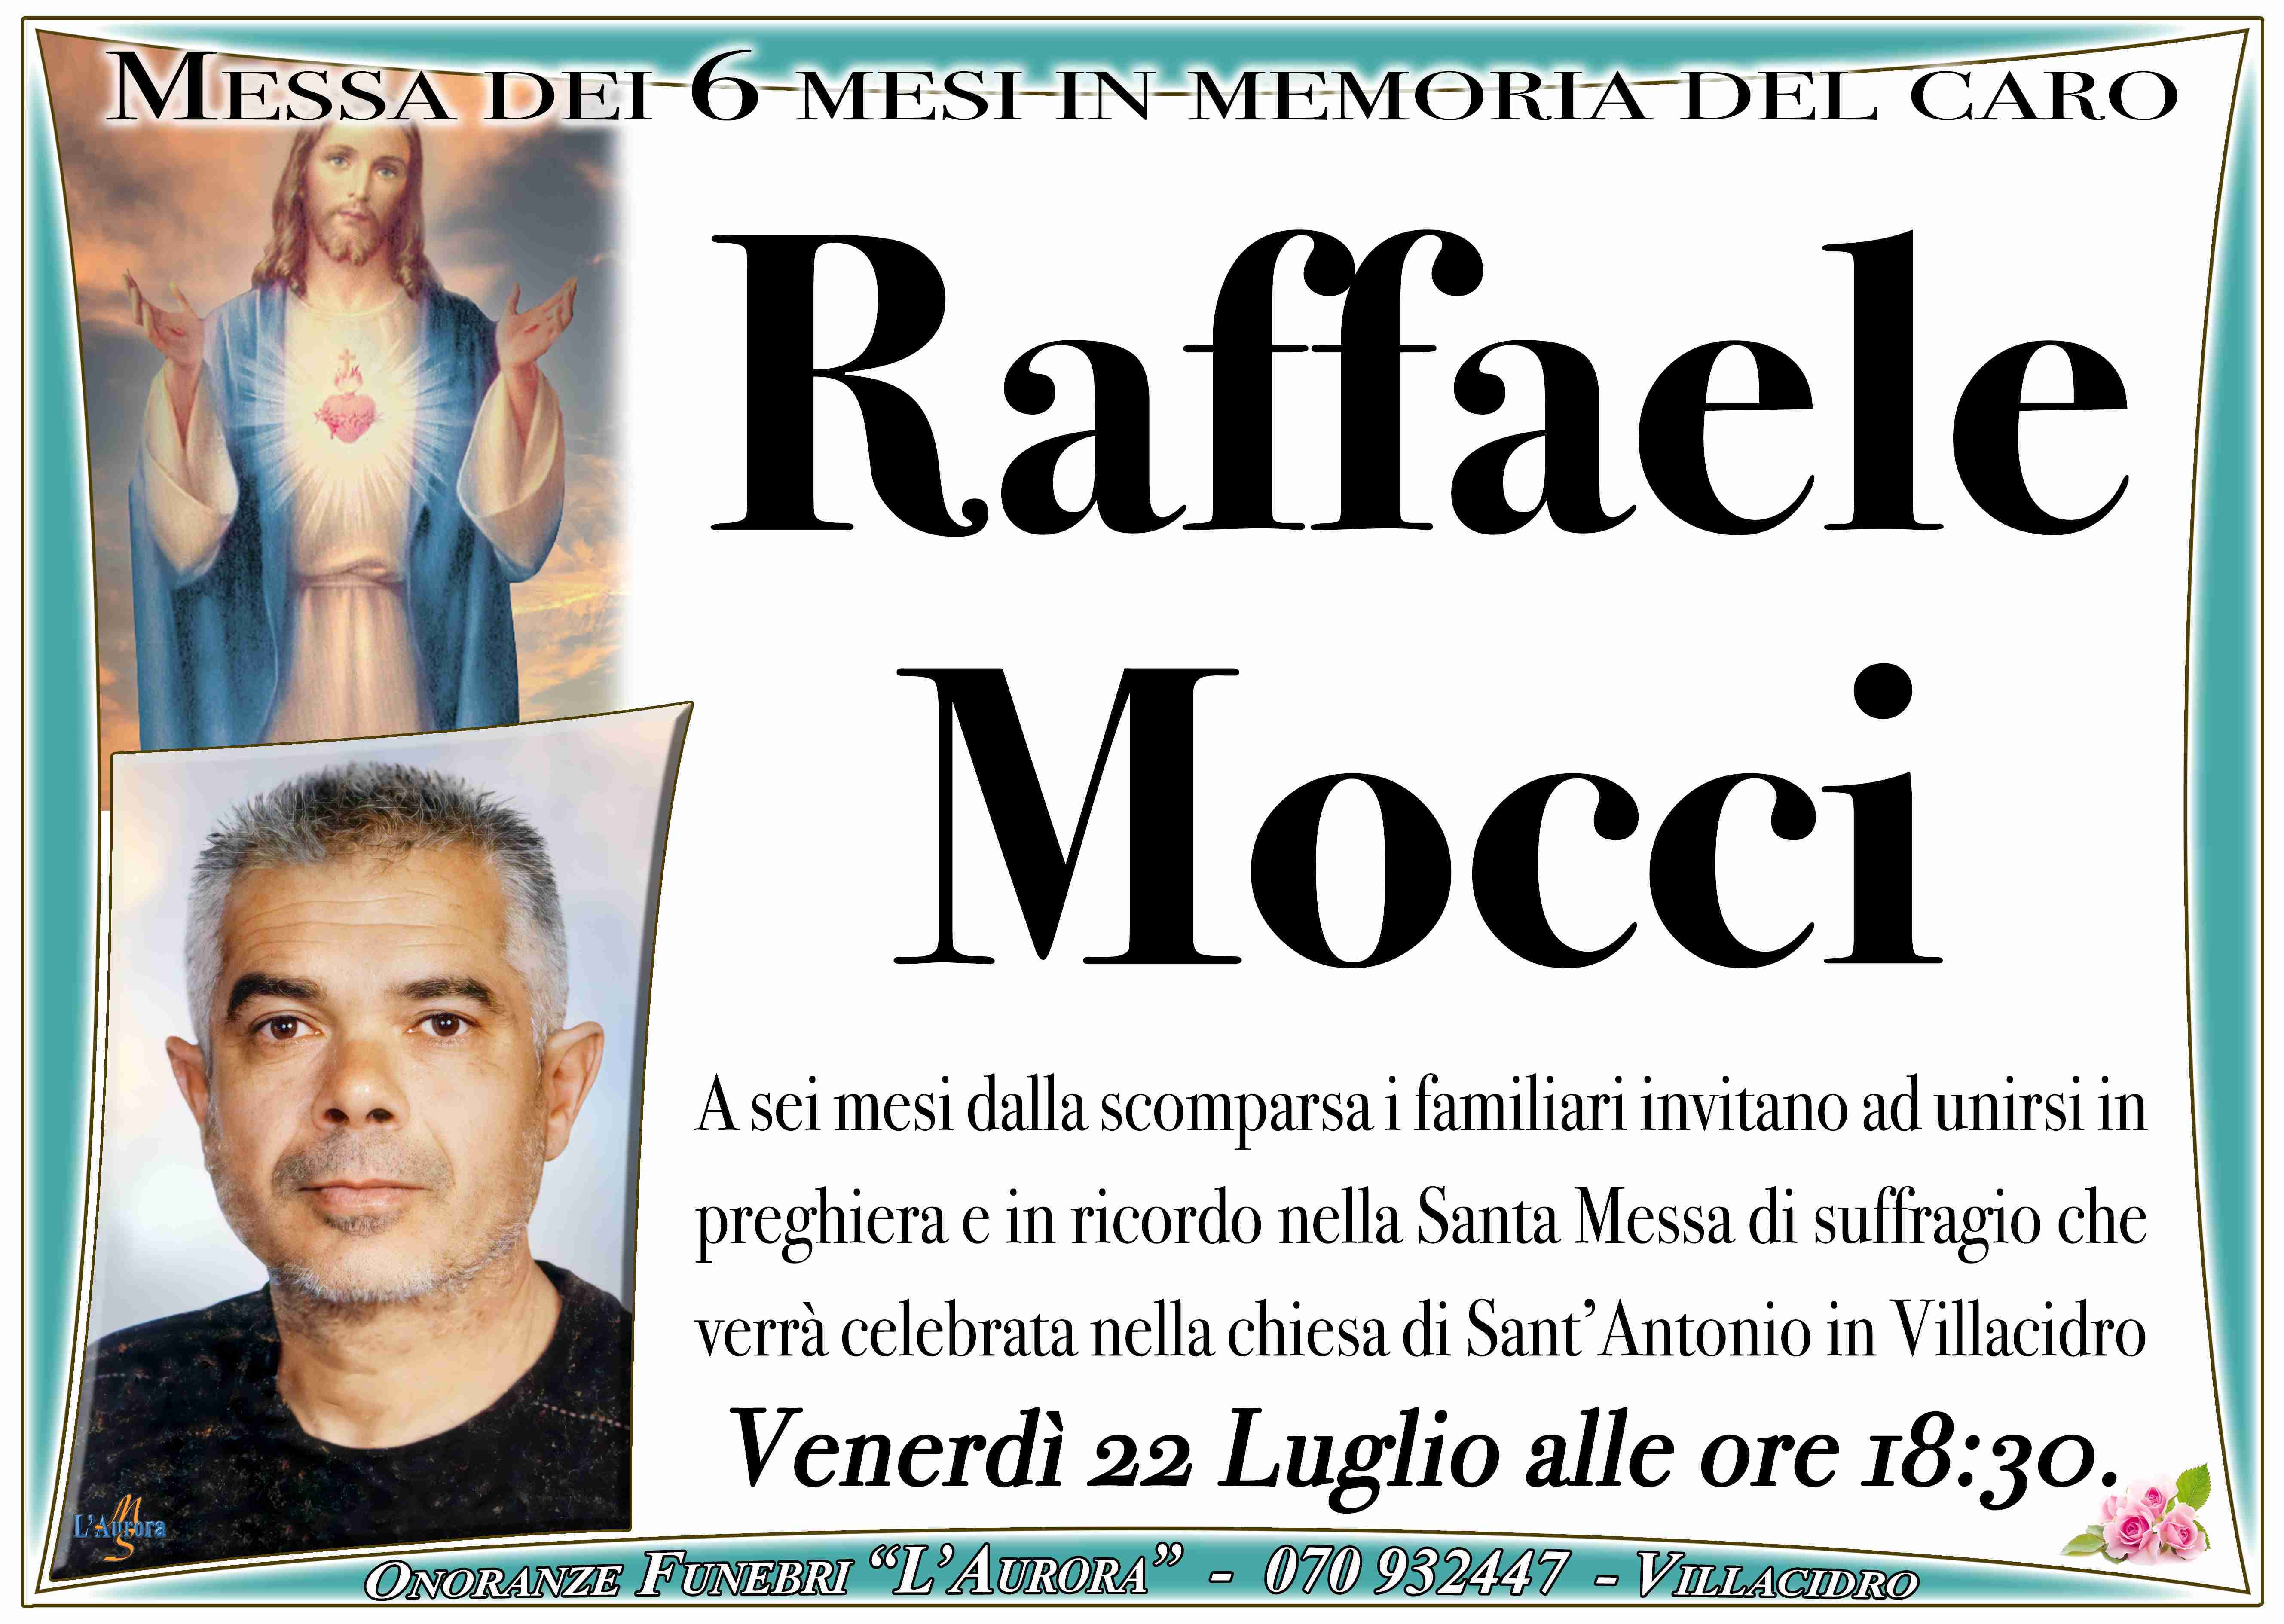 Raffaele Mocci